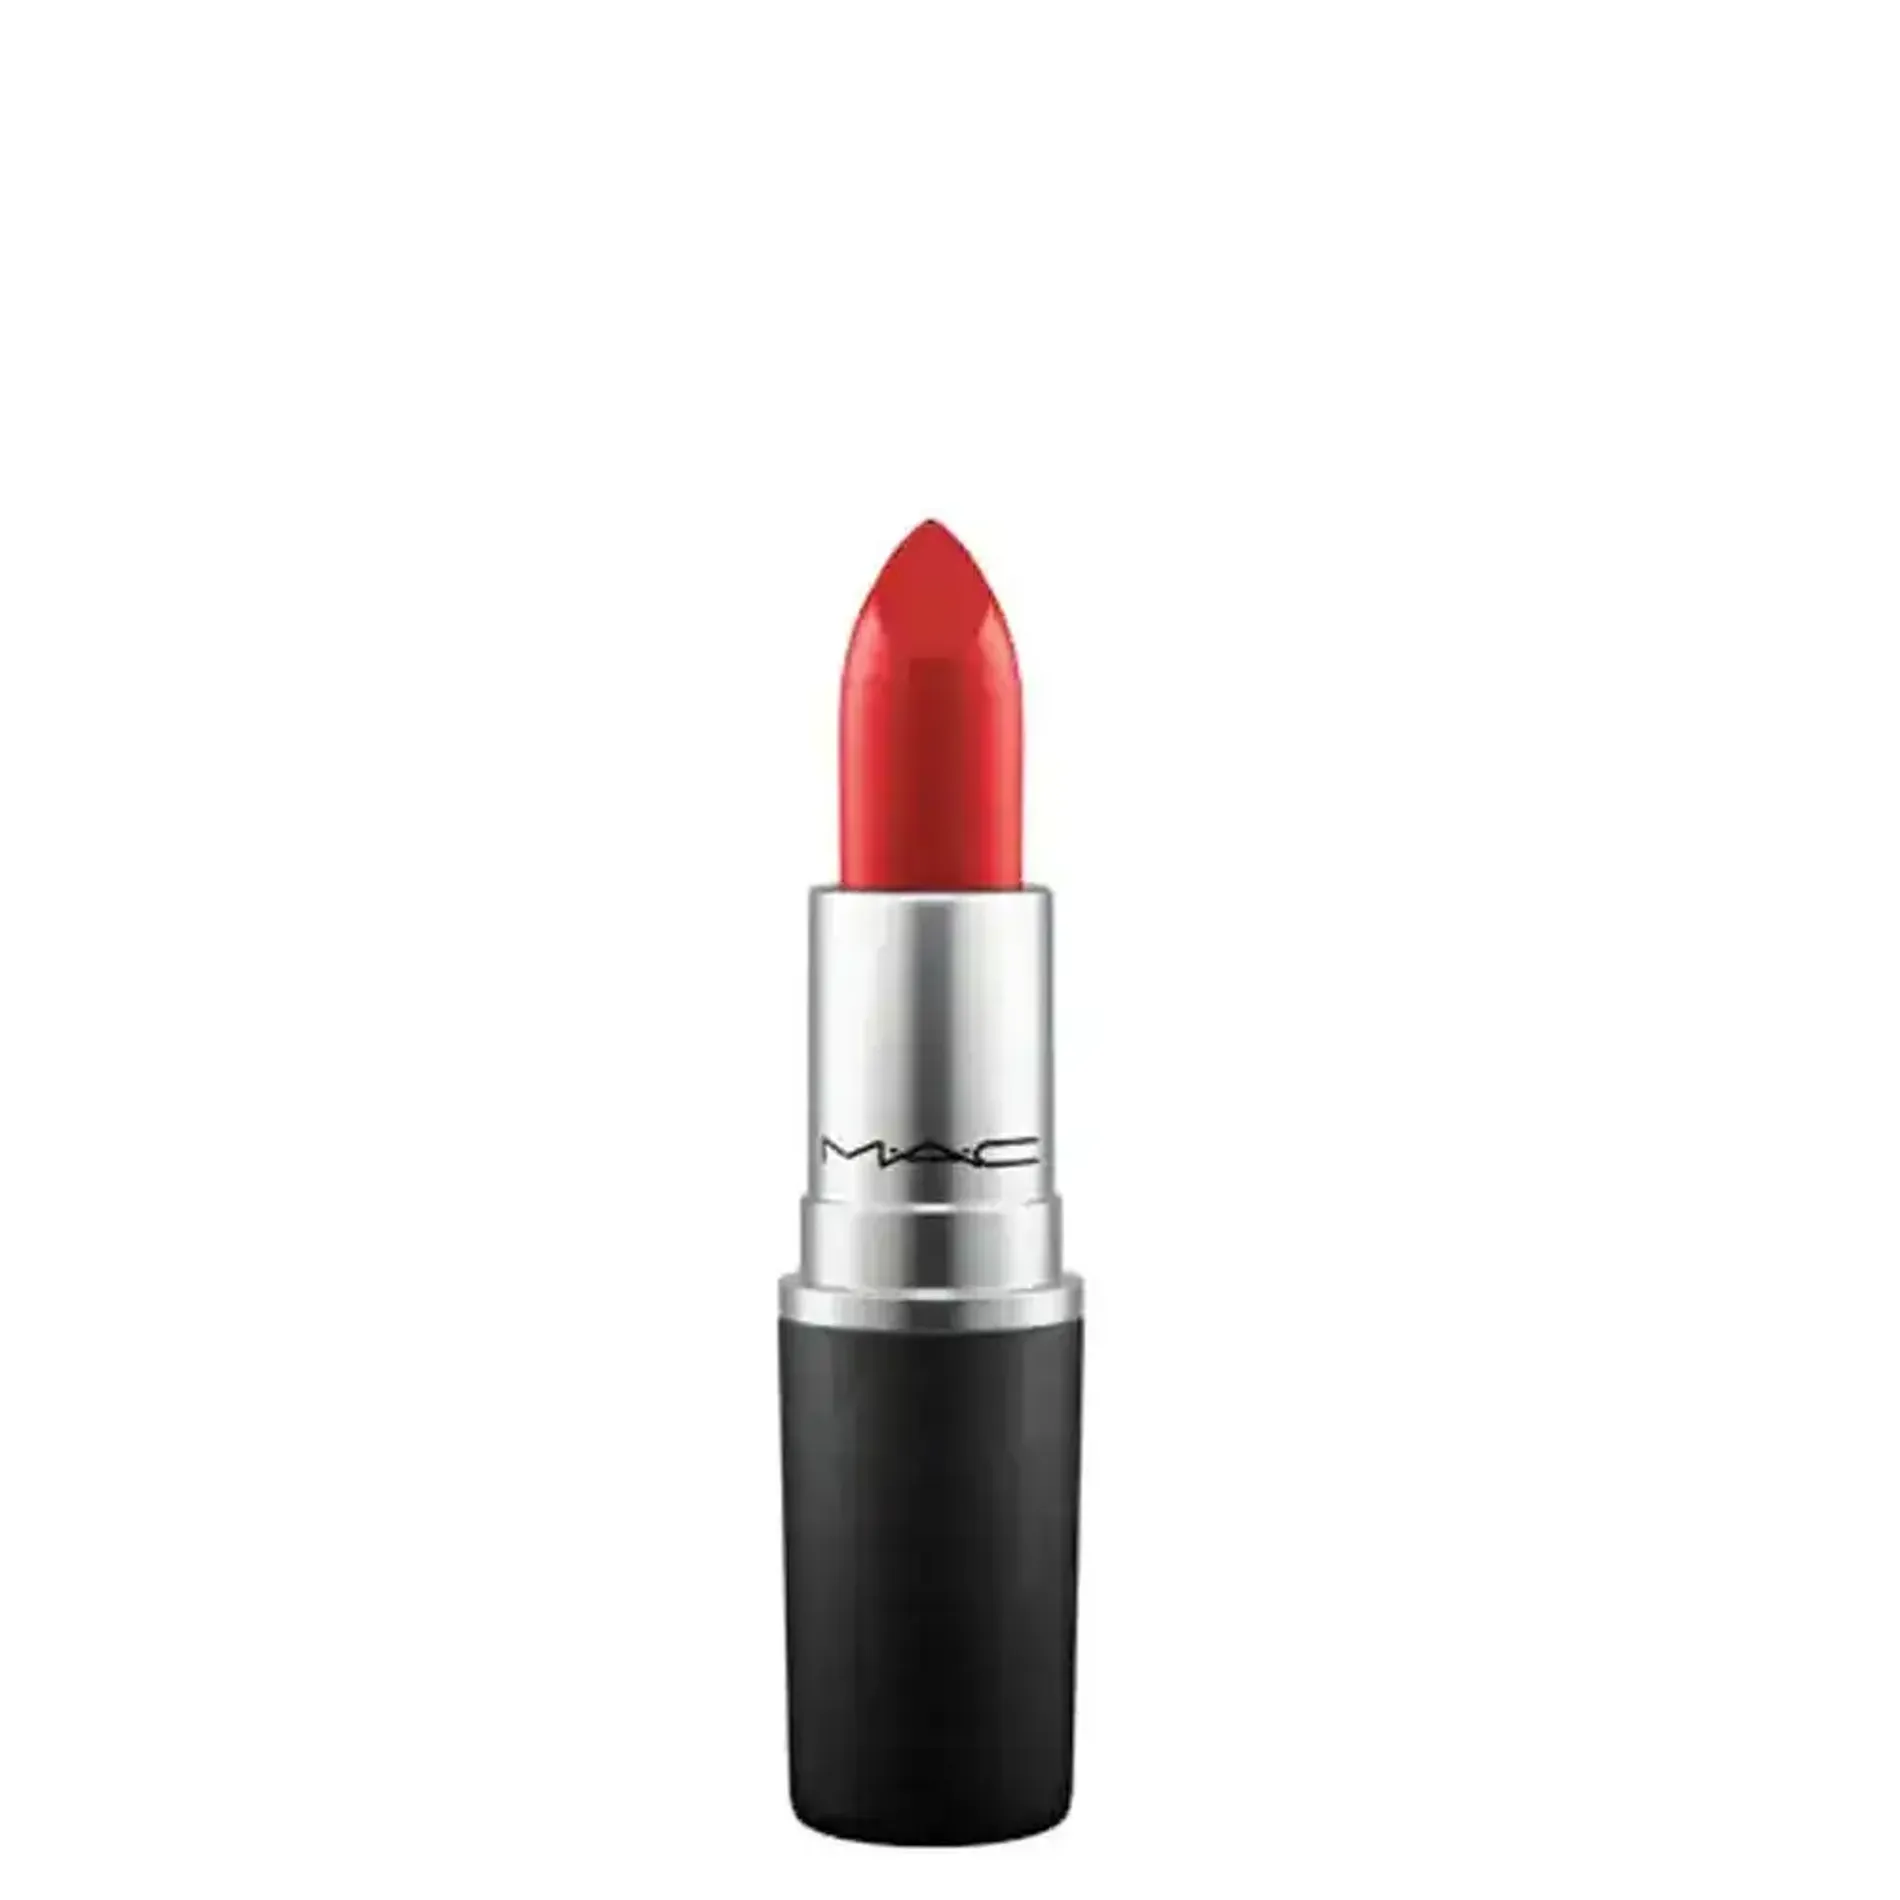 son-thoi-mac-lustre-lipstick-3g-4